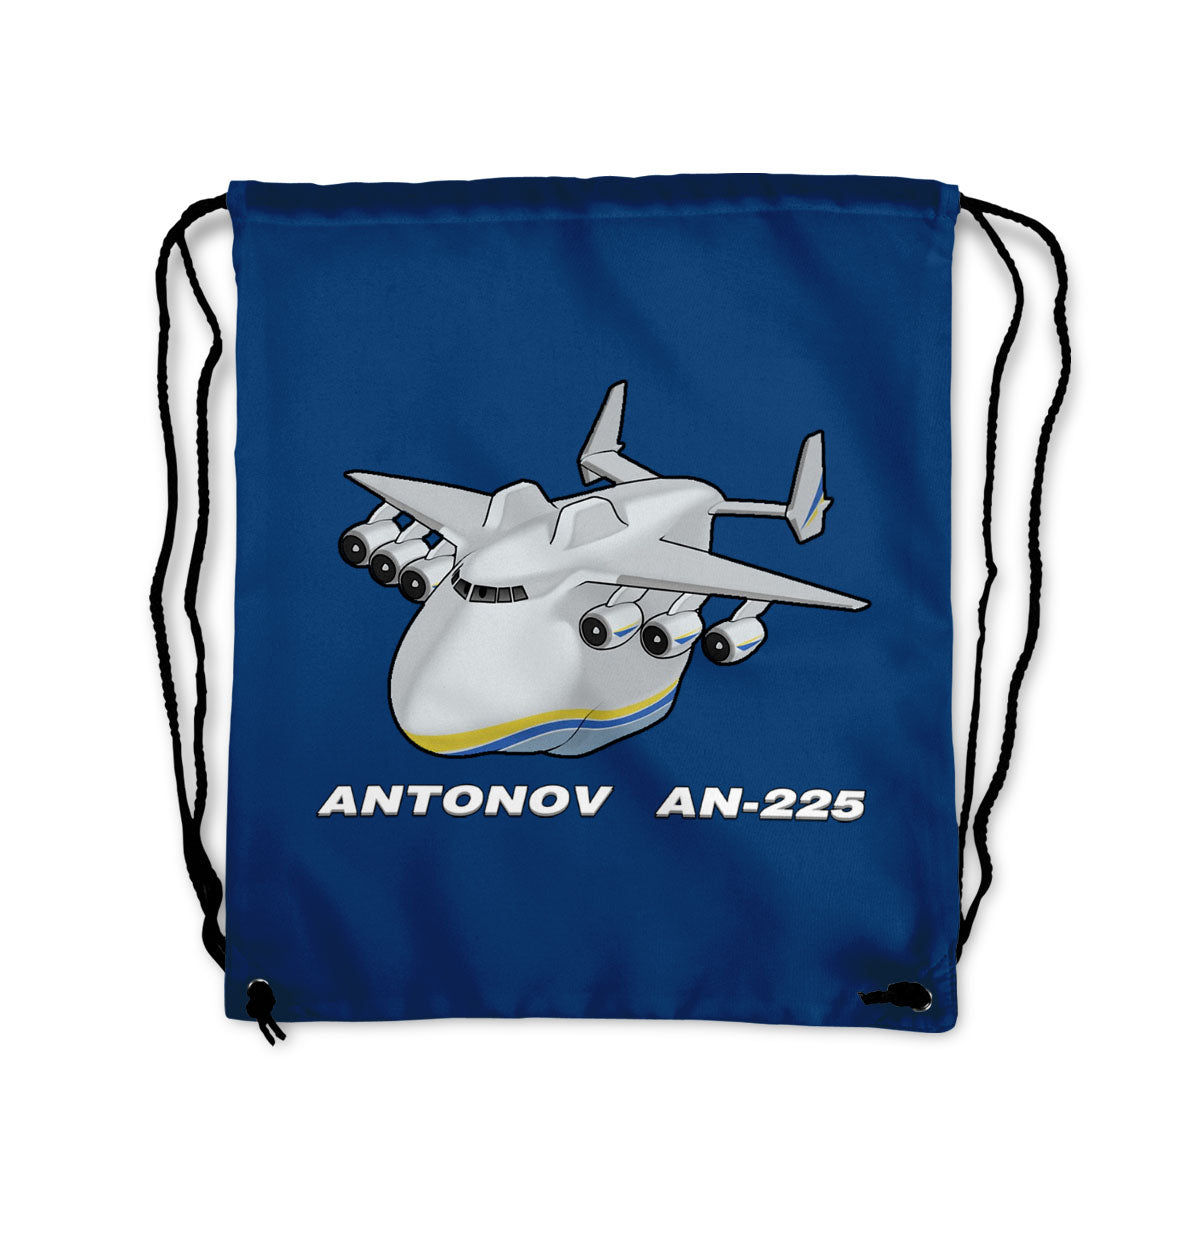 Antonov AN-225 (29) Designed Drawstring Bags